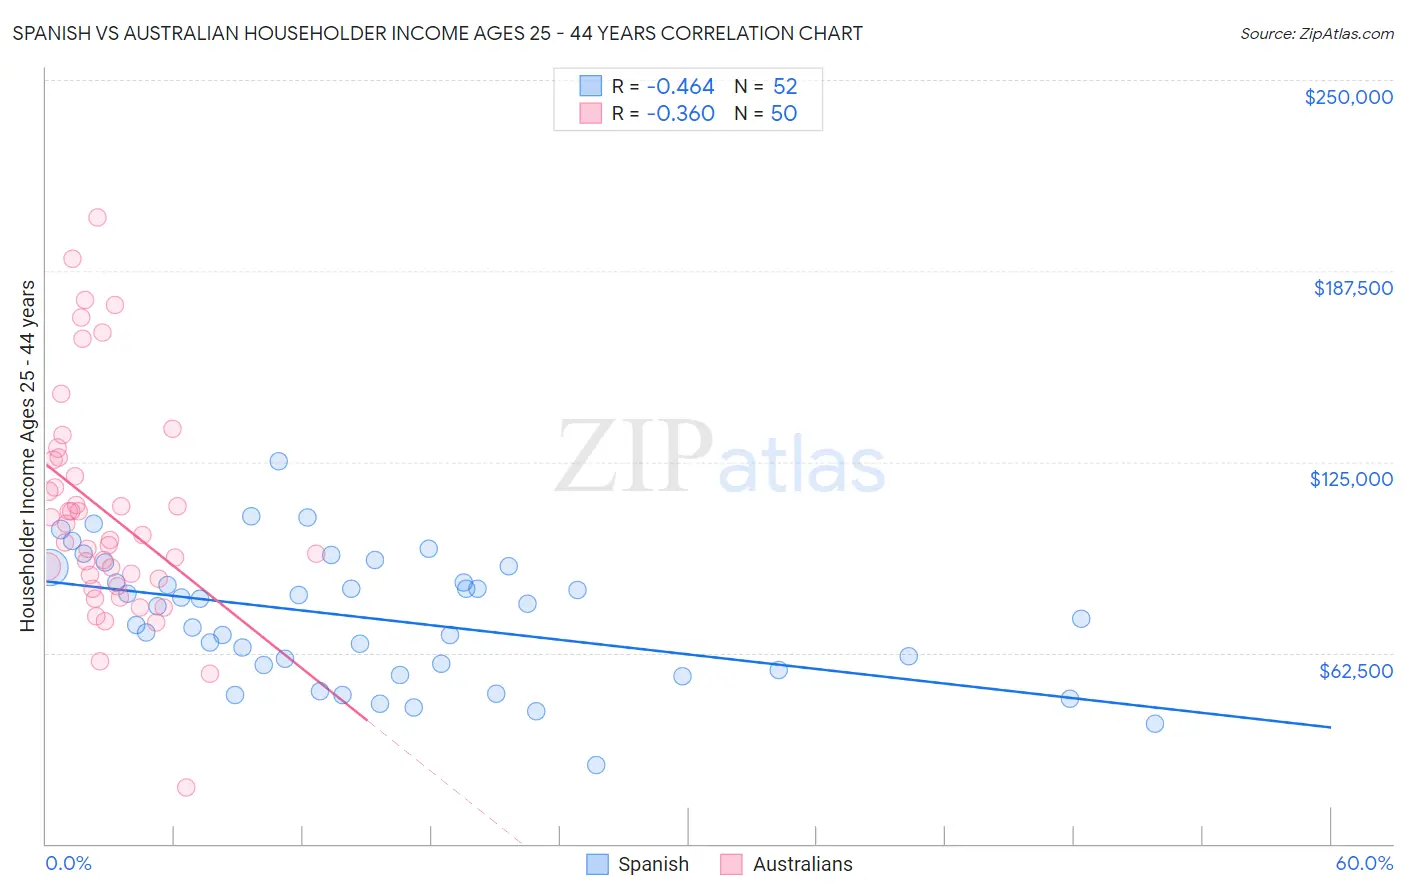 Spanish vs Australian Householder Income Ages 25 - 44 years